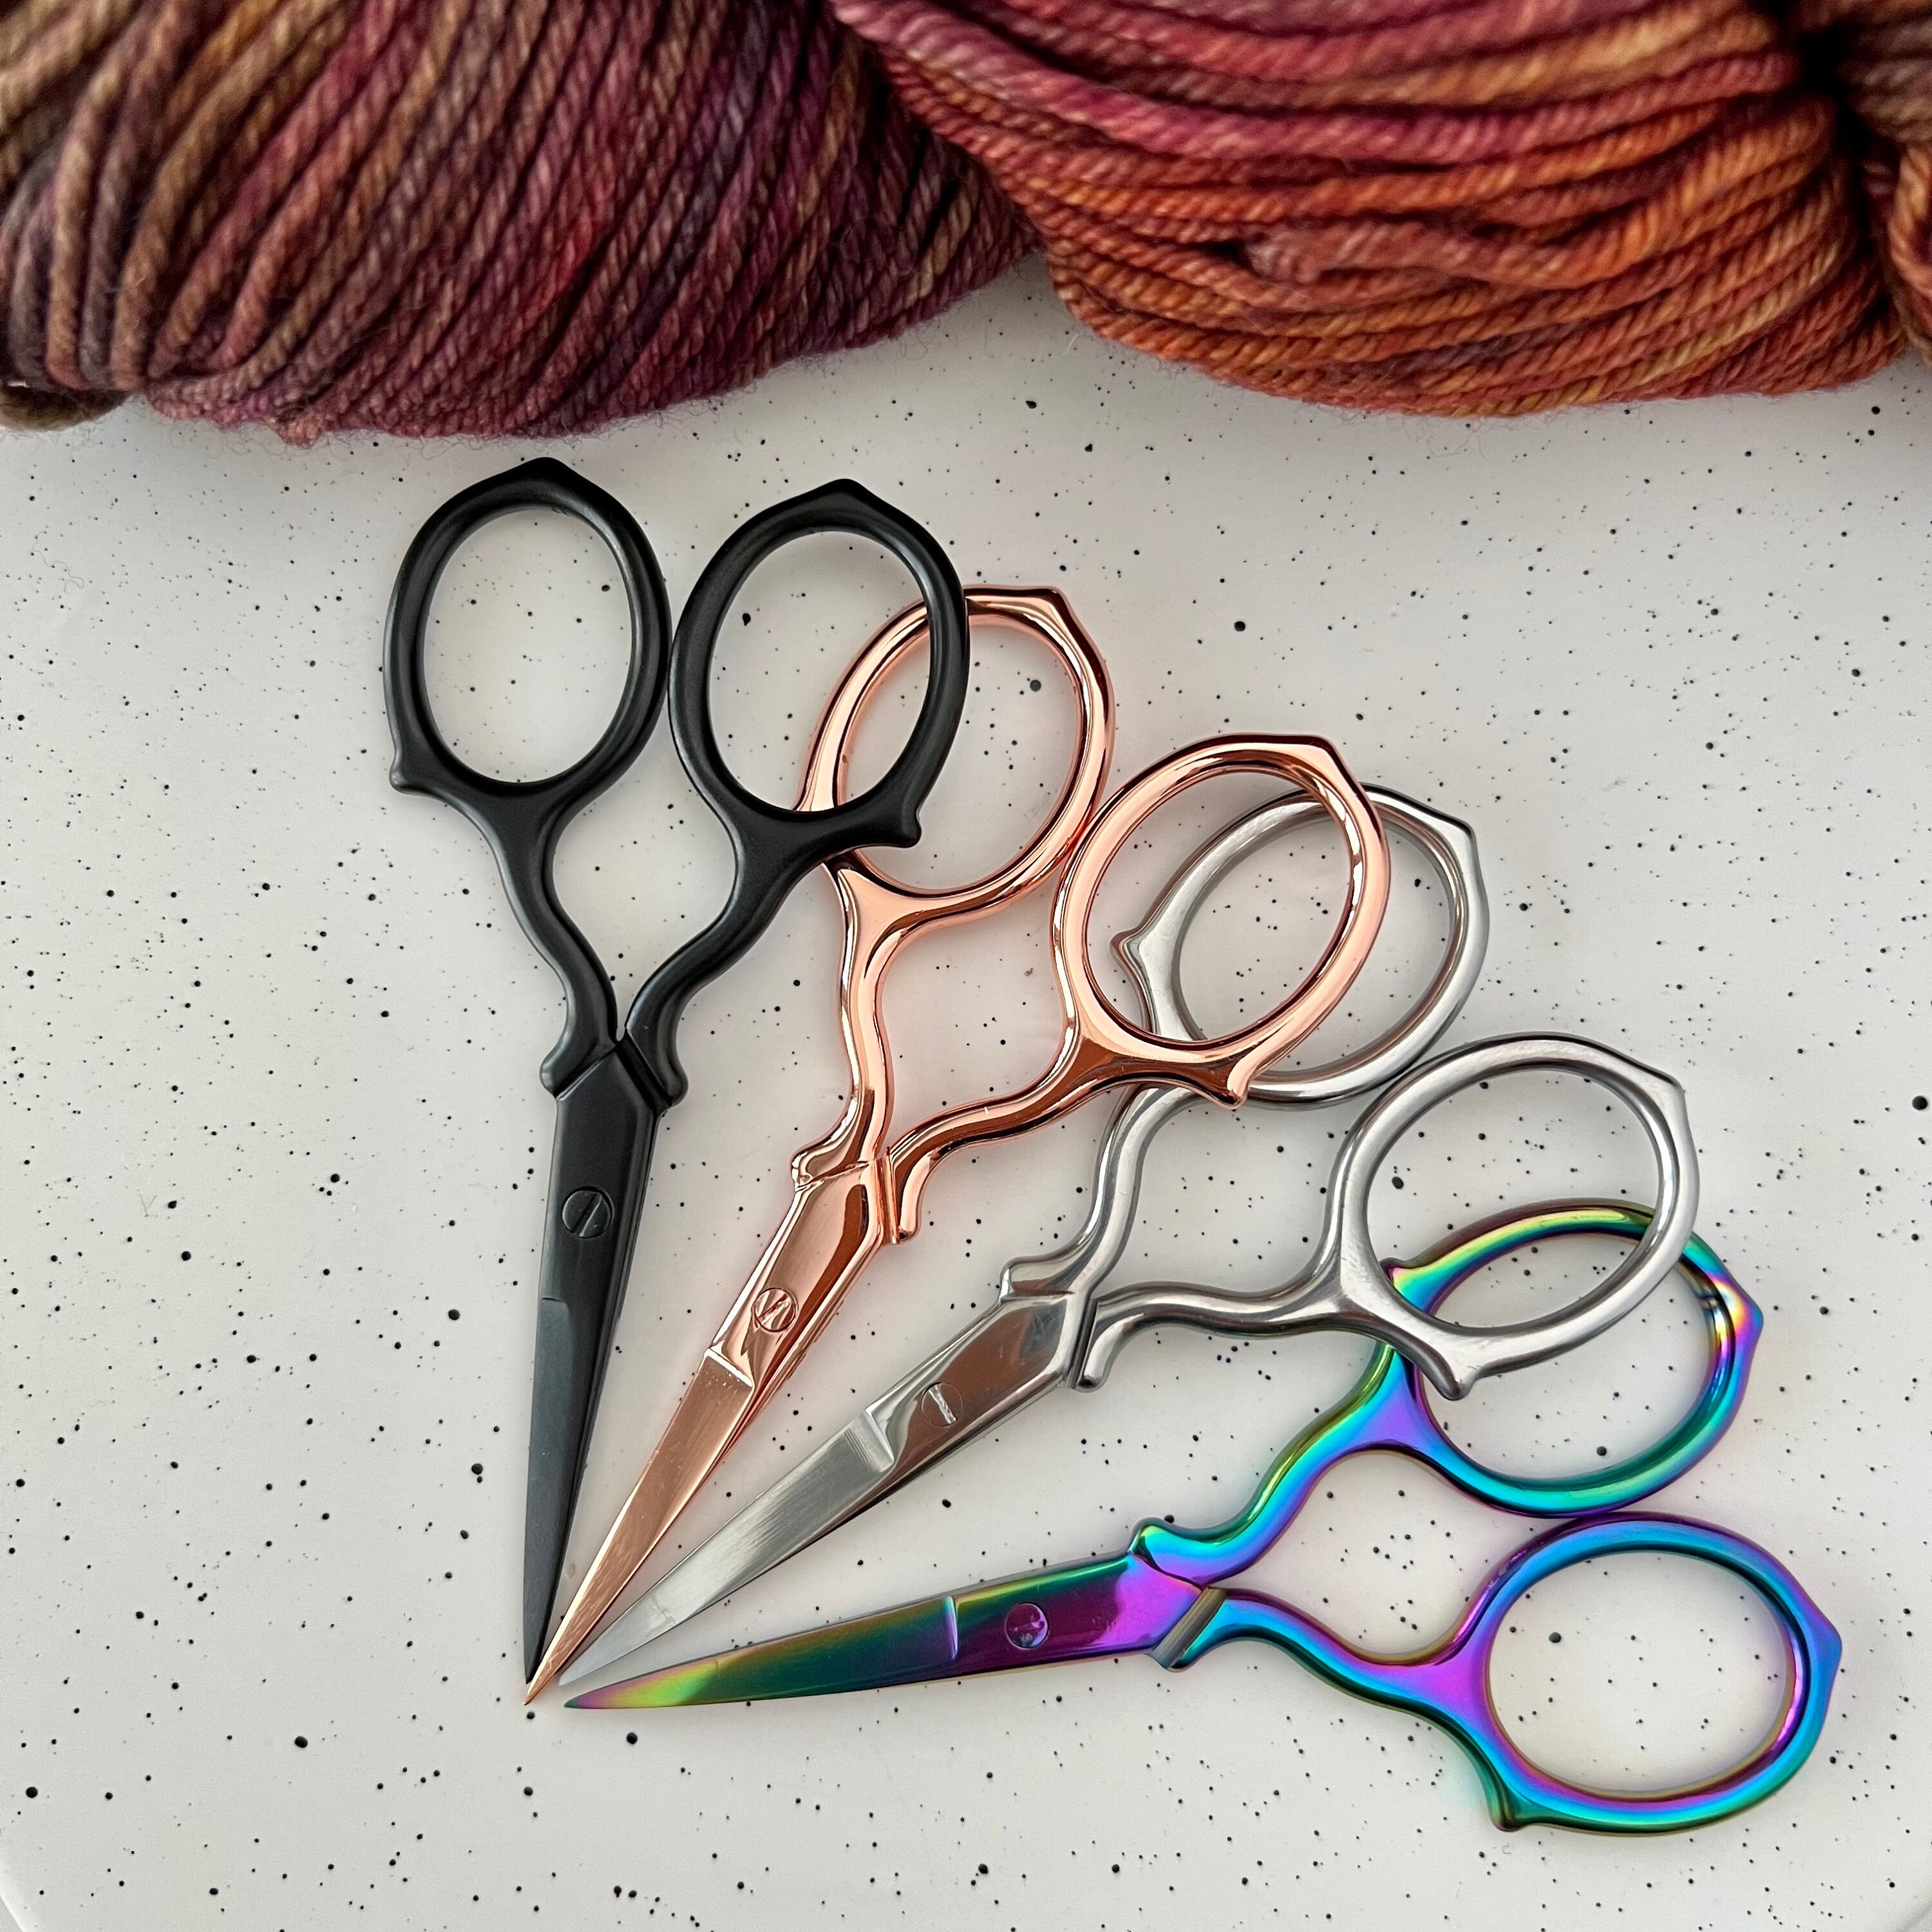 Small embroidery scissors - rainbow finish — I Heart Stitch Art